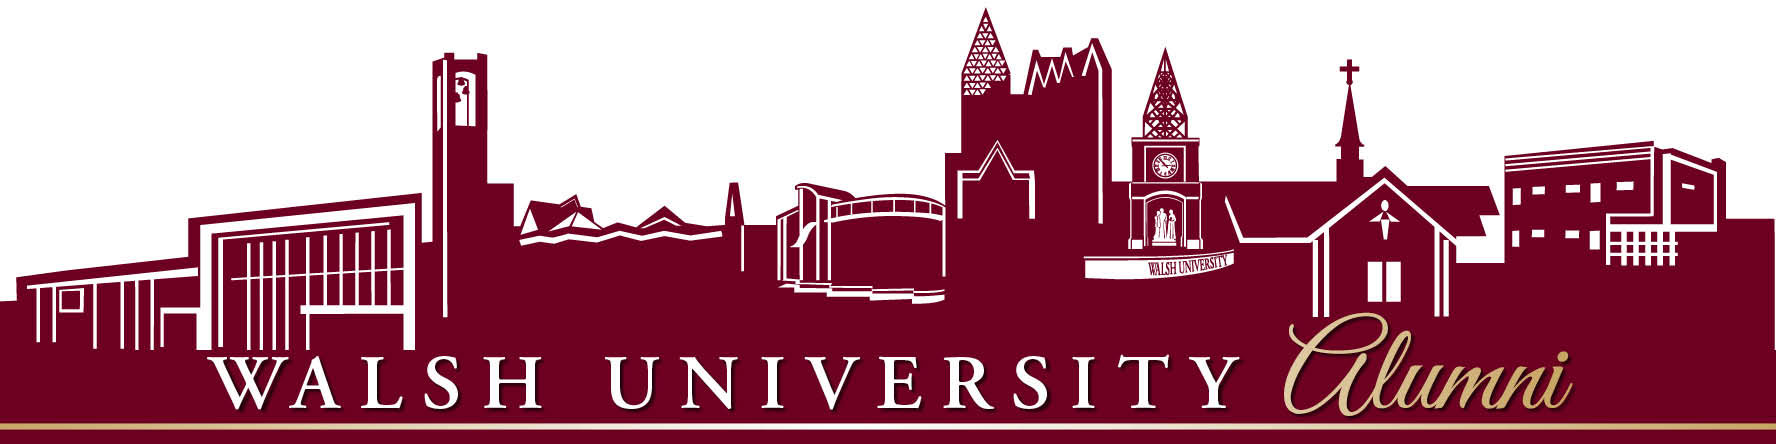 Walsh University Alumni text over university skyline